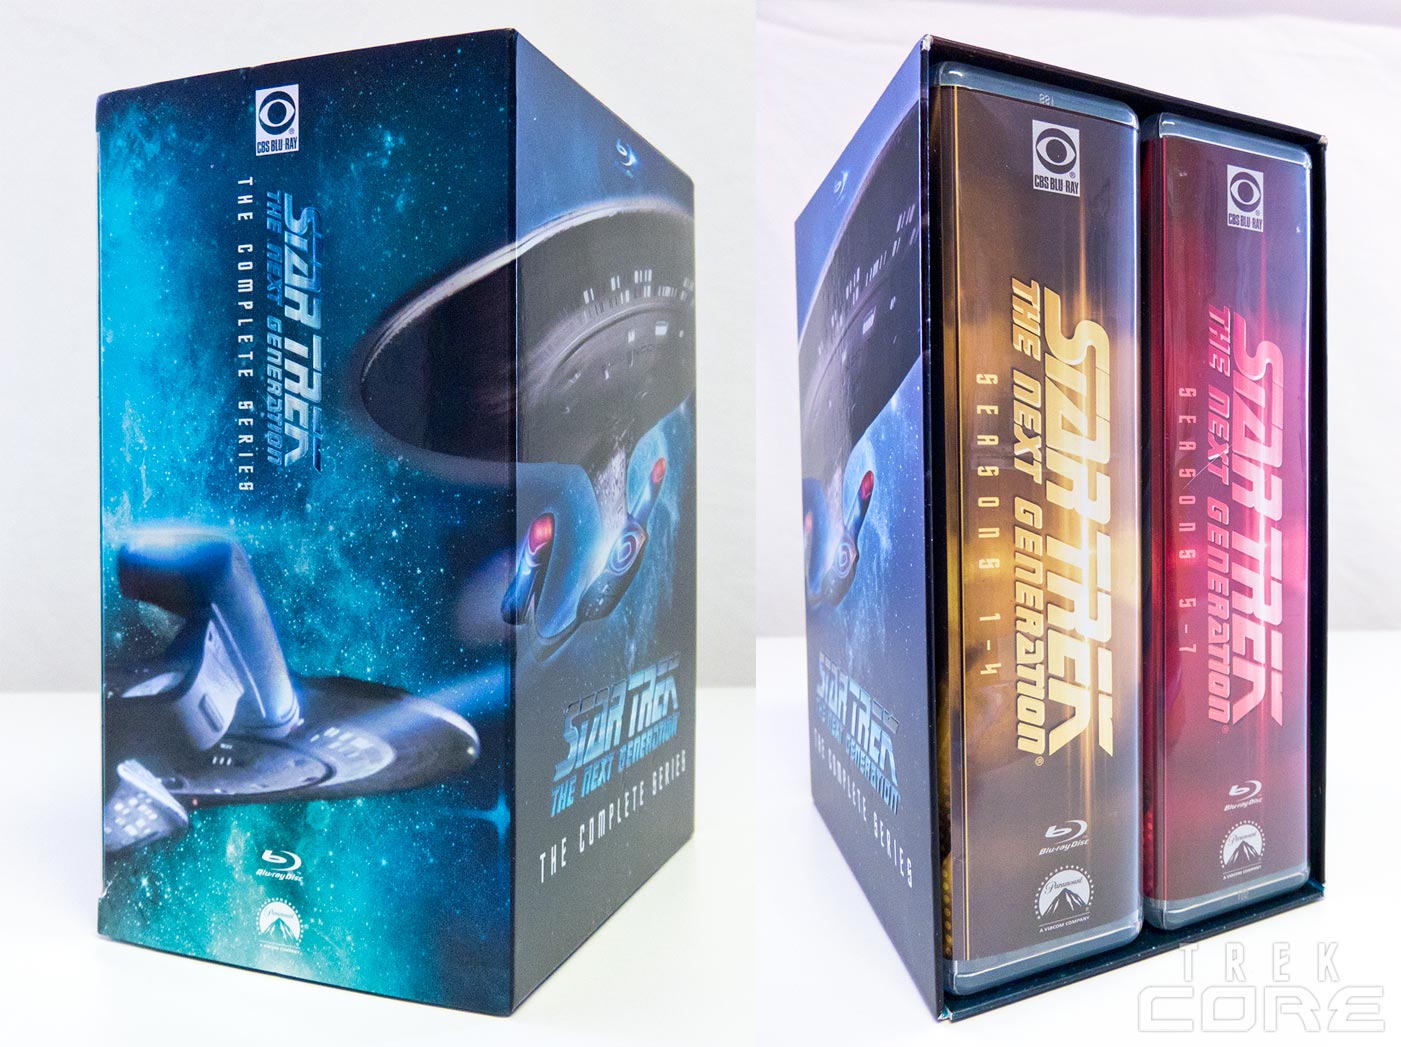 tar Trek The Next Generation: The Complete Series (Blu-ray)